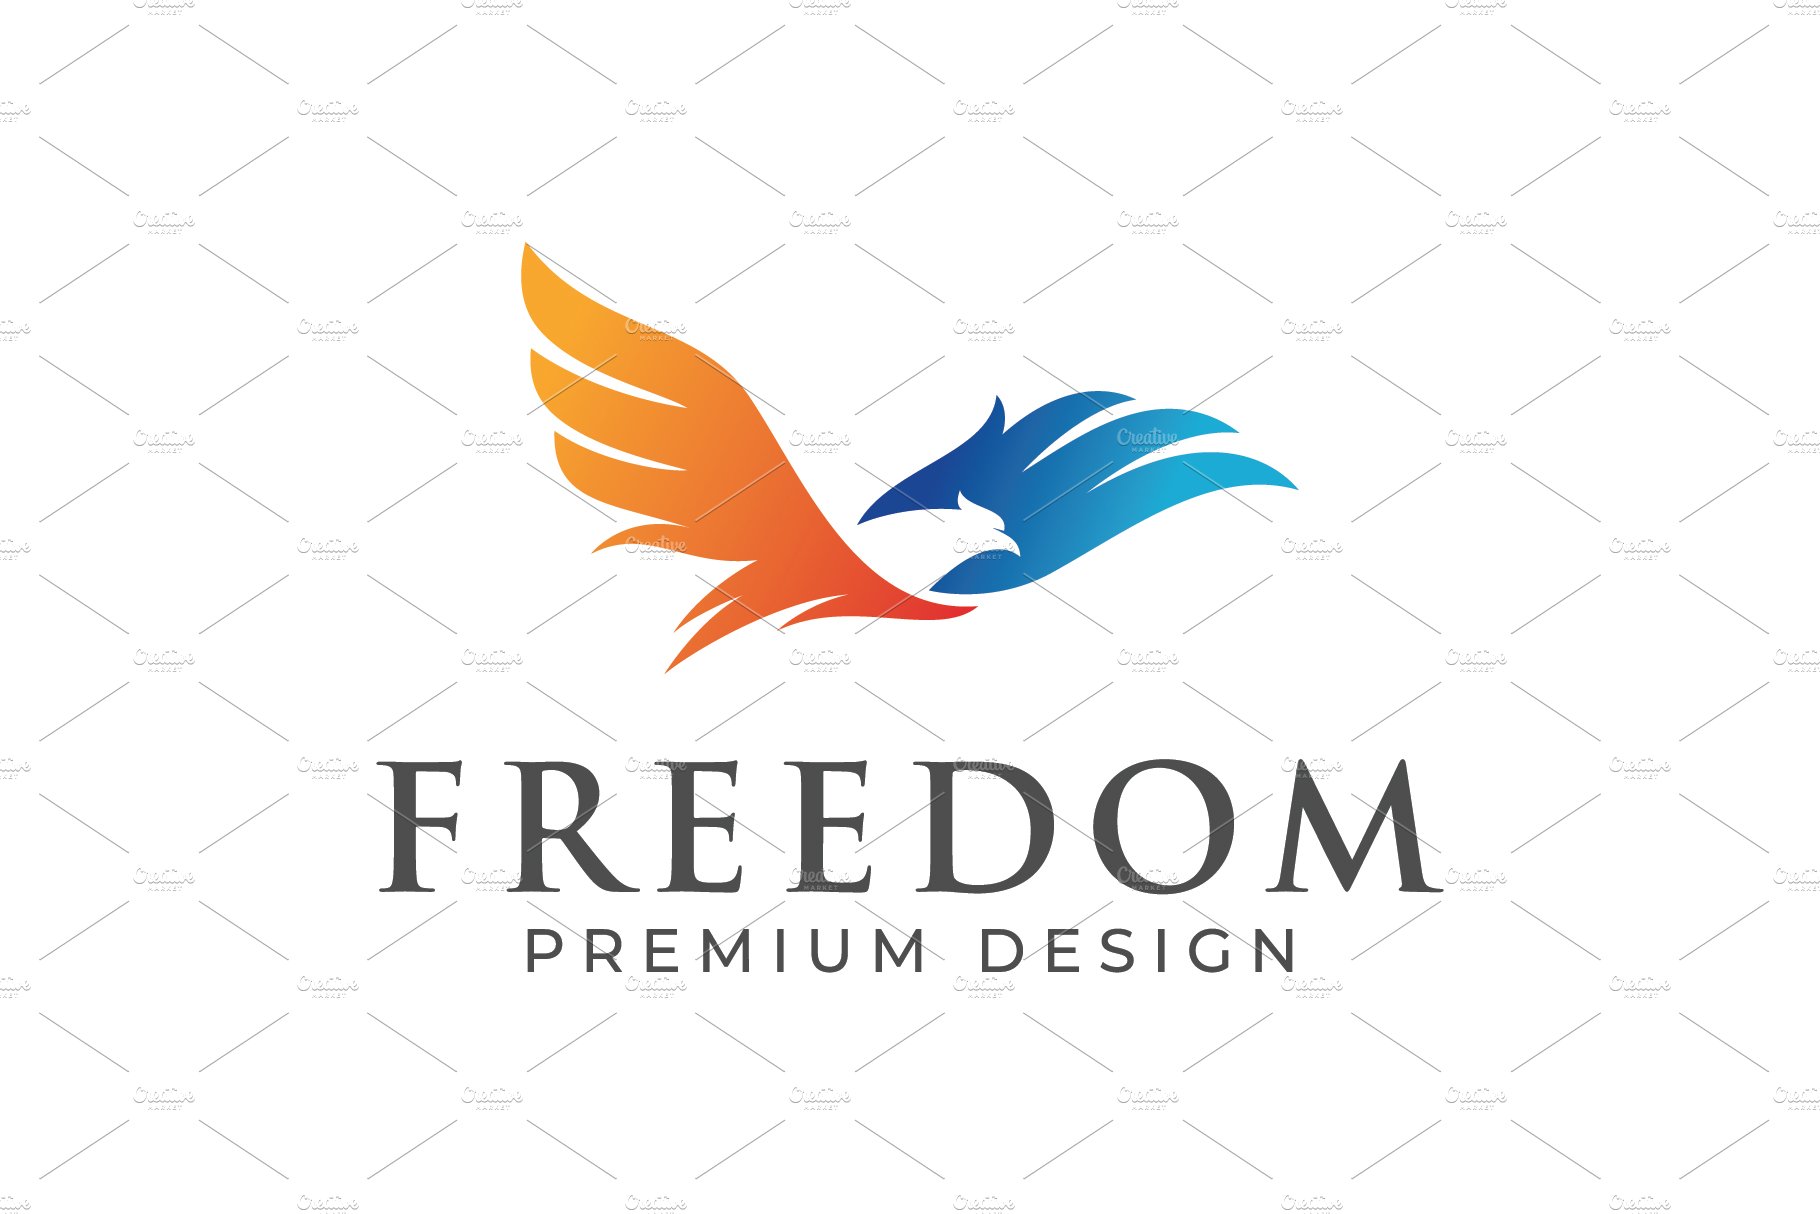 fly hawk/eagle freedom logo design cover image.